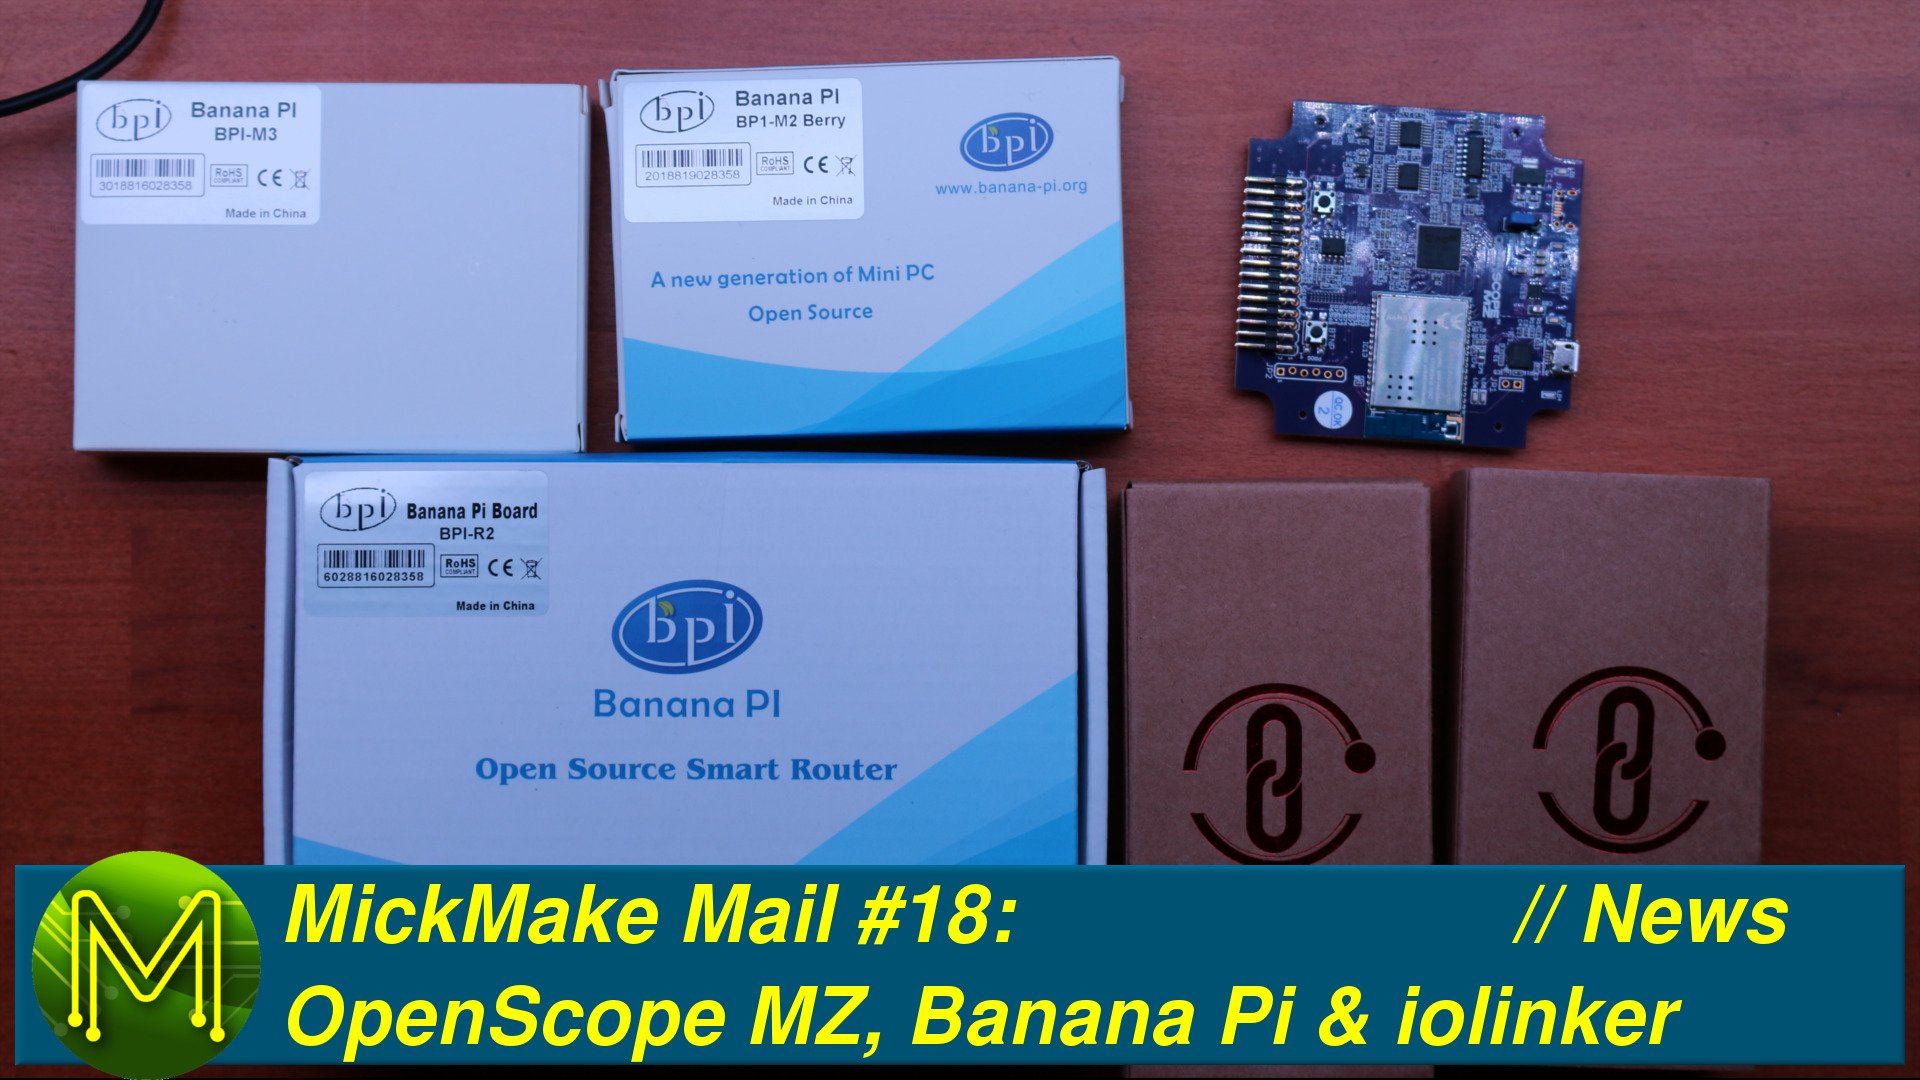 MickMake Mail #18: OpenScope MZ, Banana Pi & iolinker